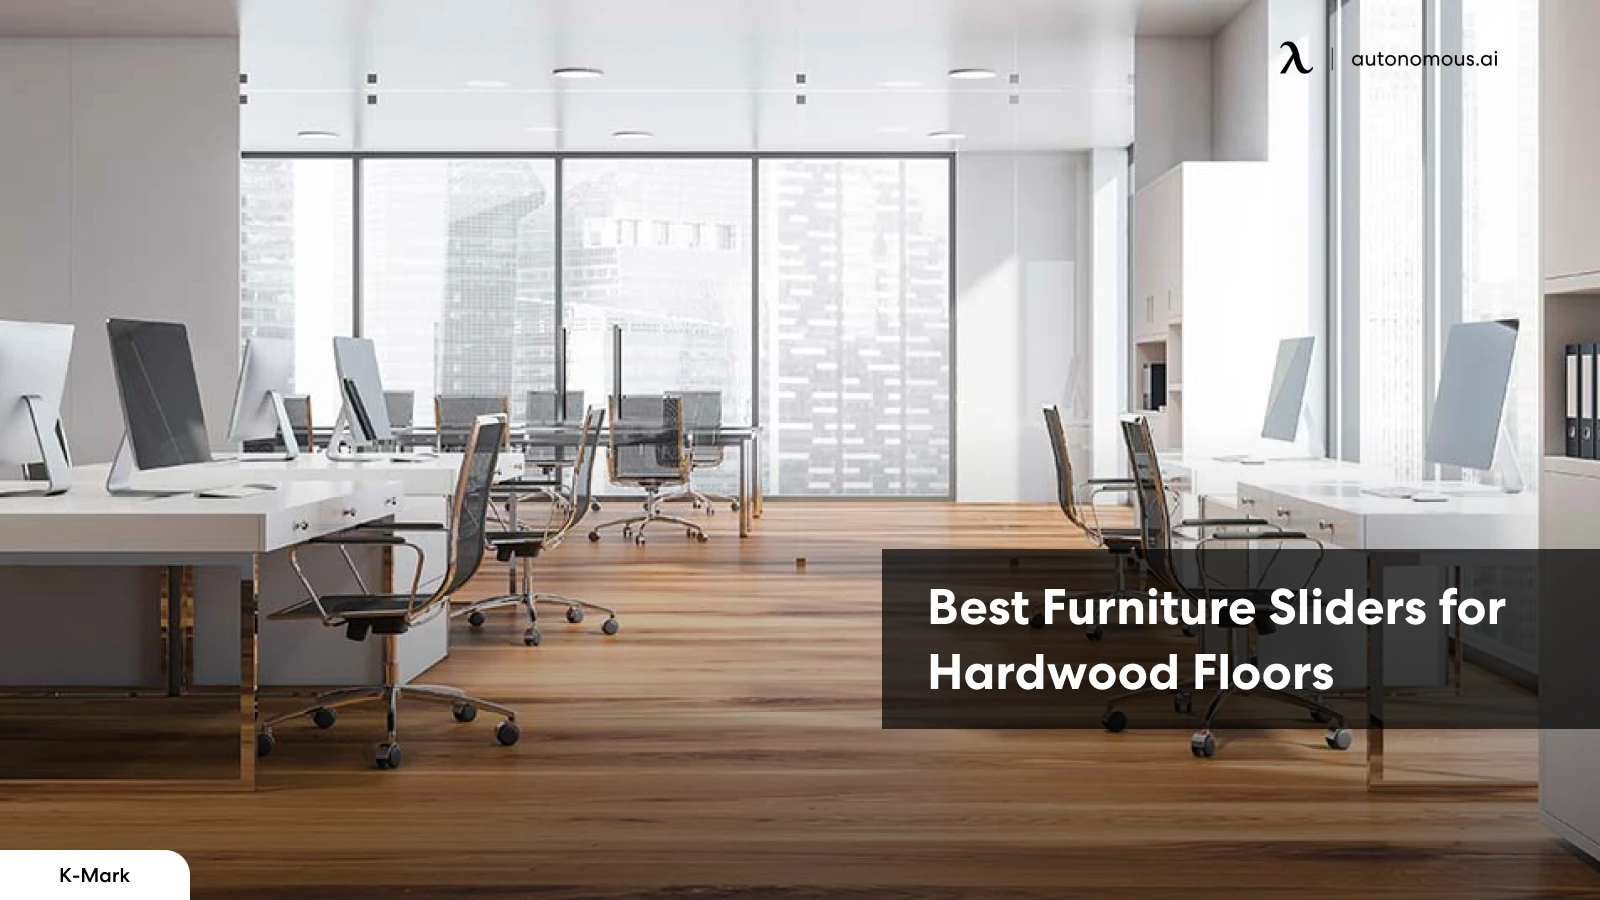 Full Guide to the Best Furniture Sliders for Hardwood Floors in 2023